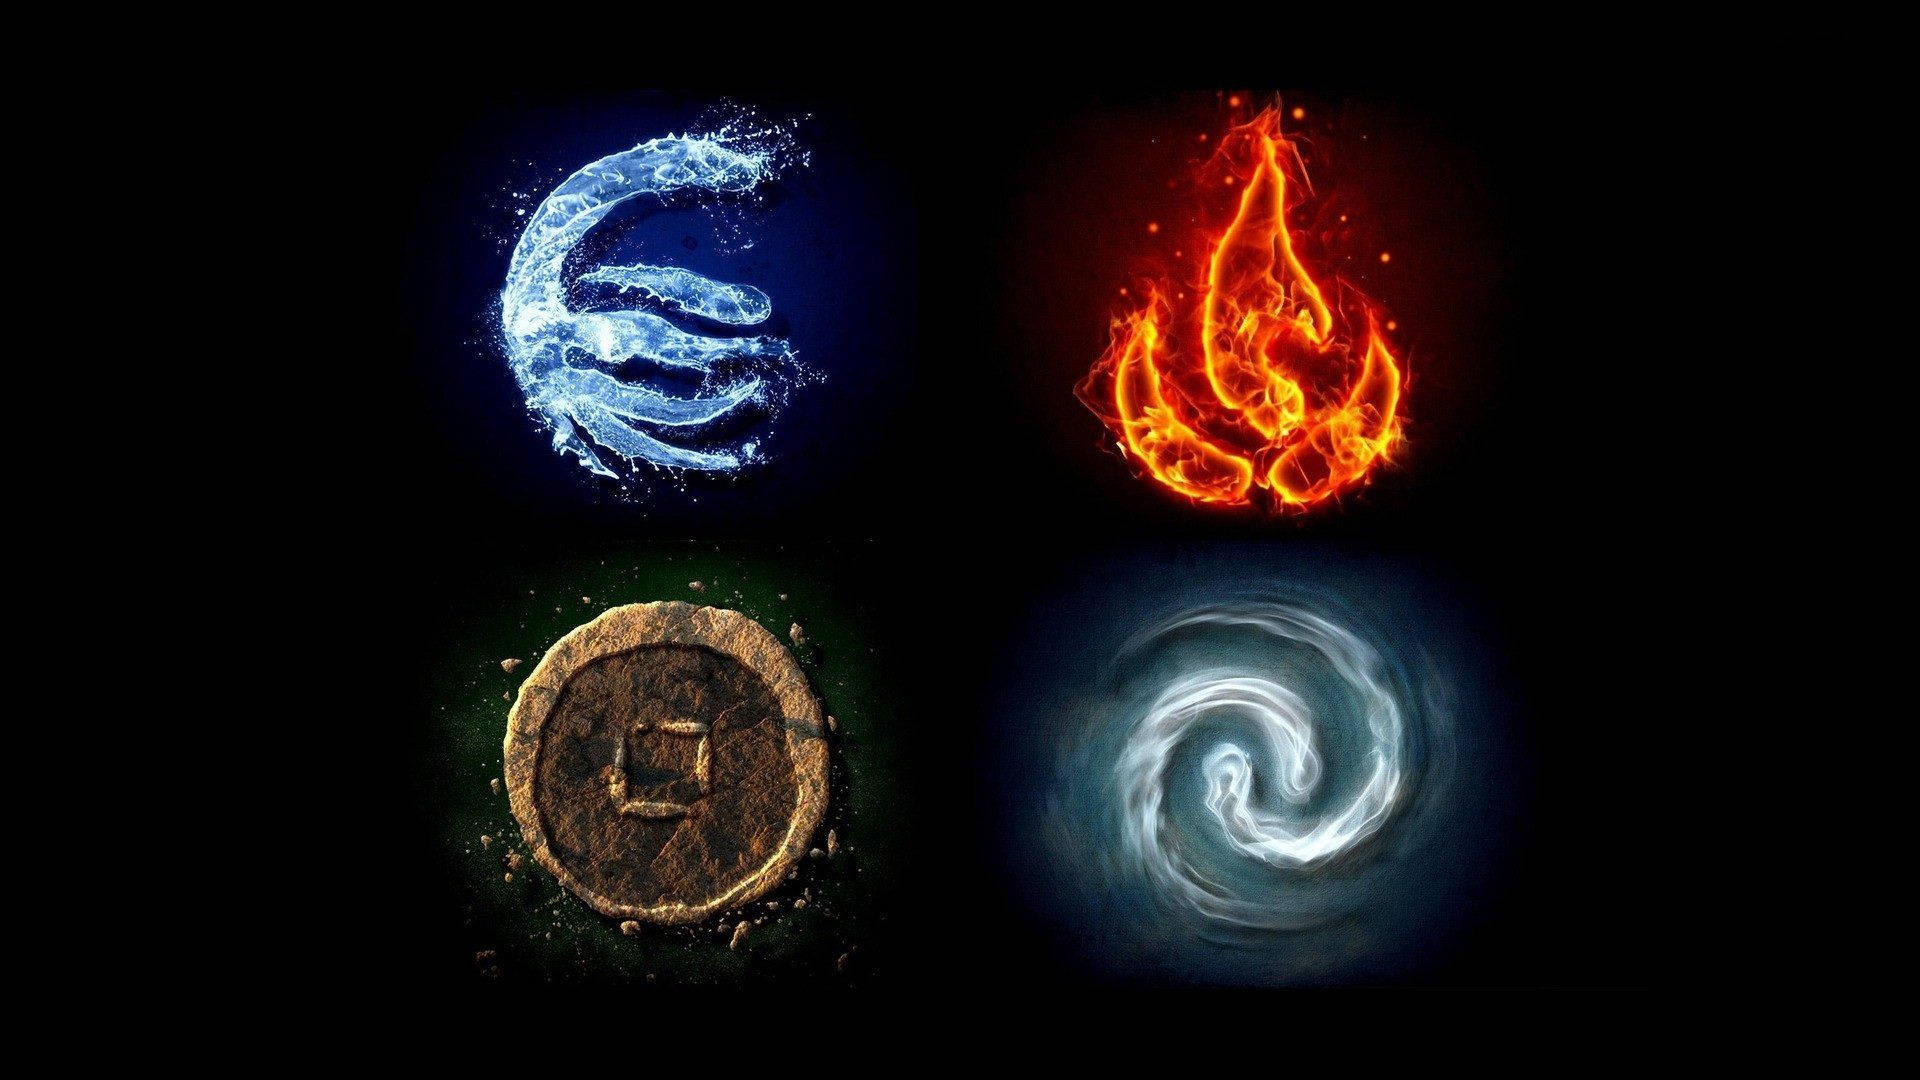 Avatar The Last Airbender Four Elements' Symbols